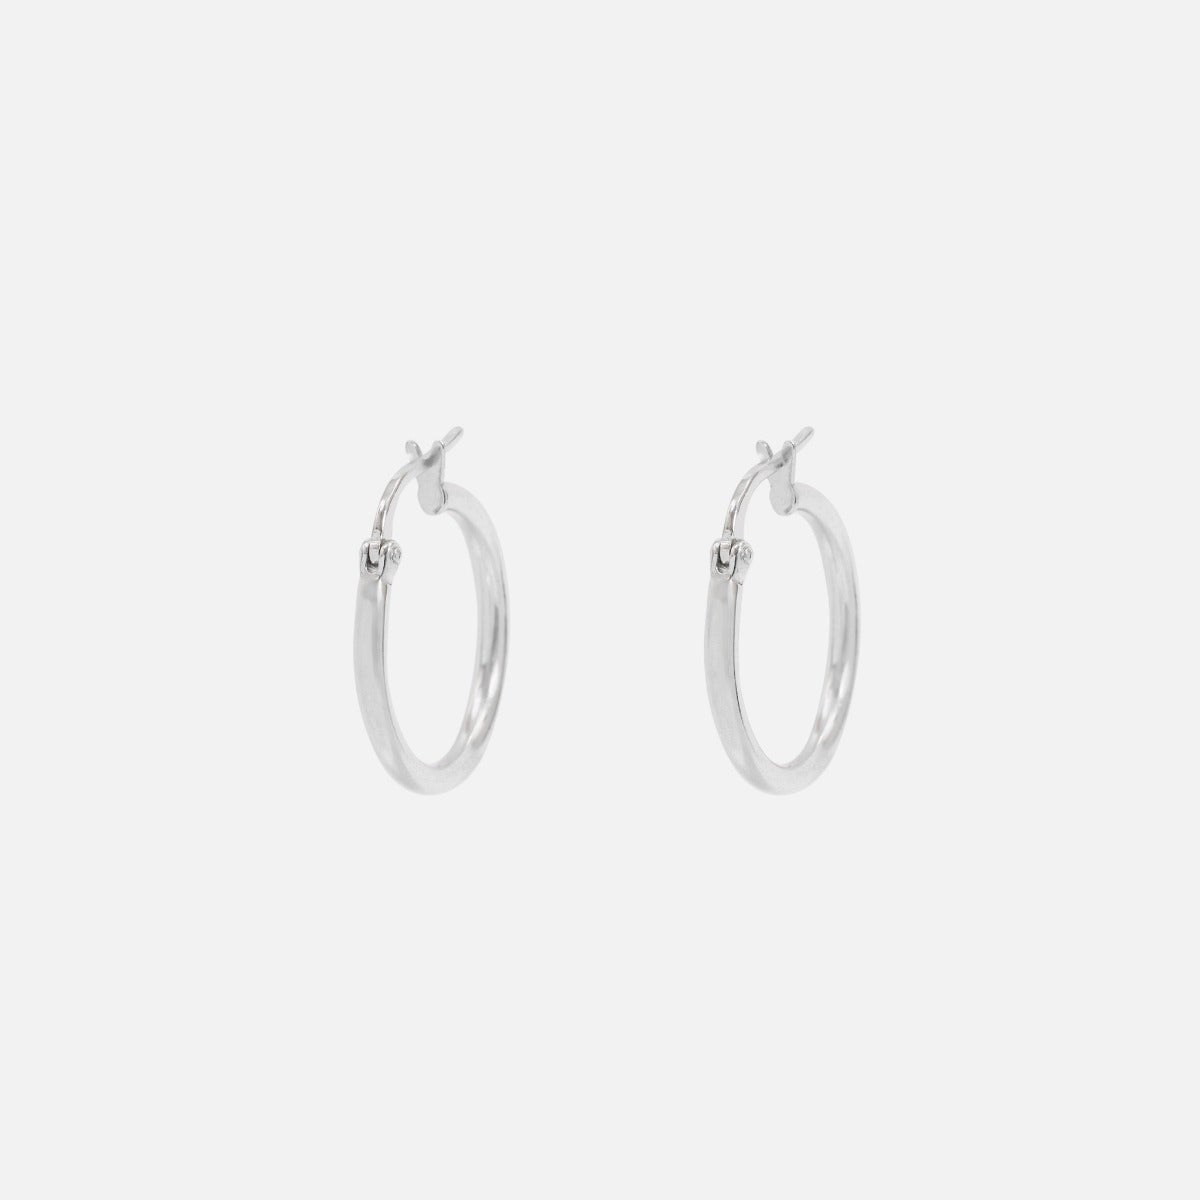 Sterling silver hoops earrings